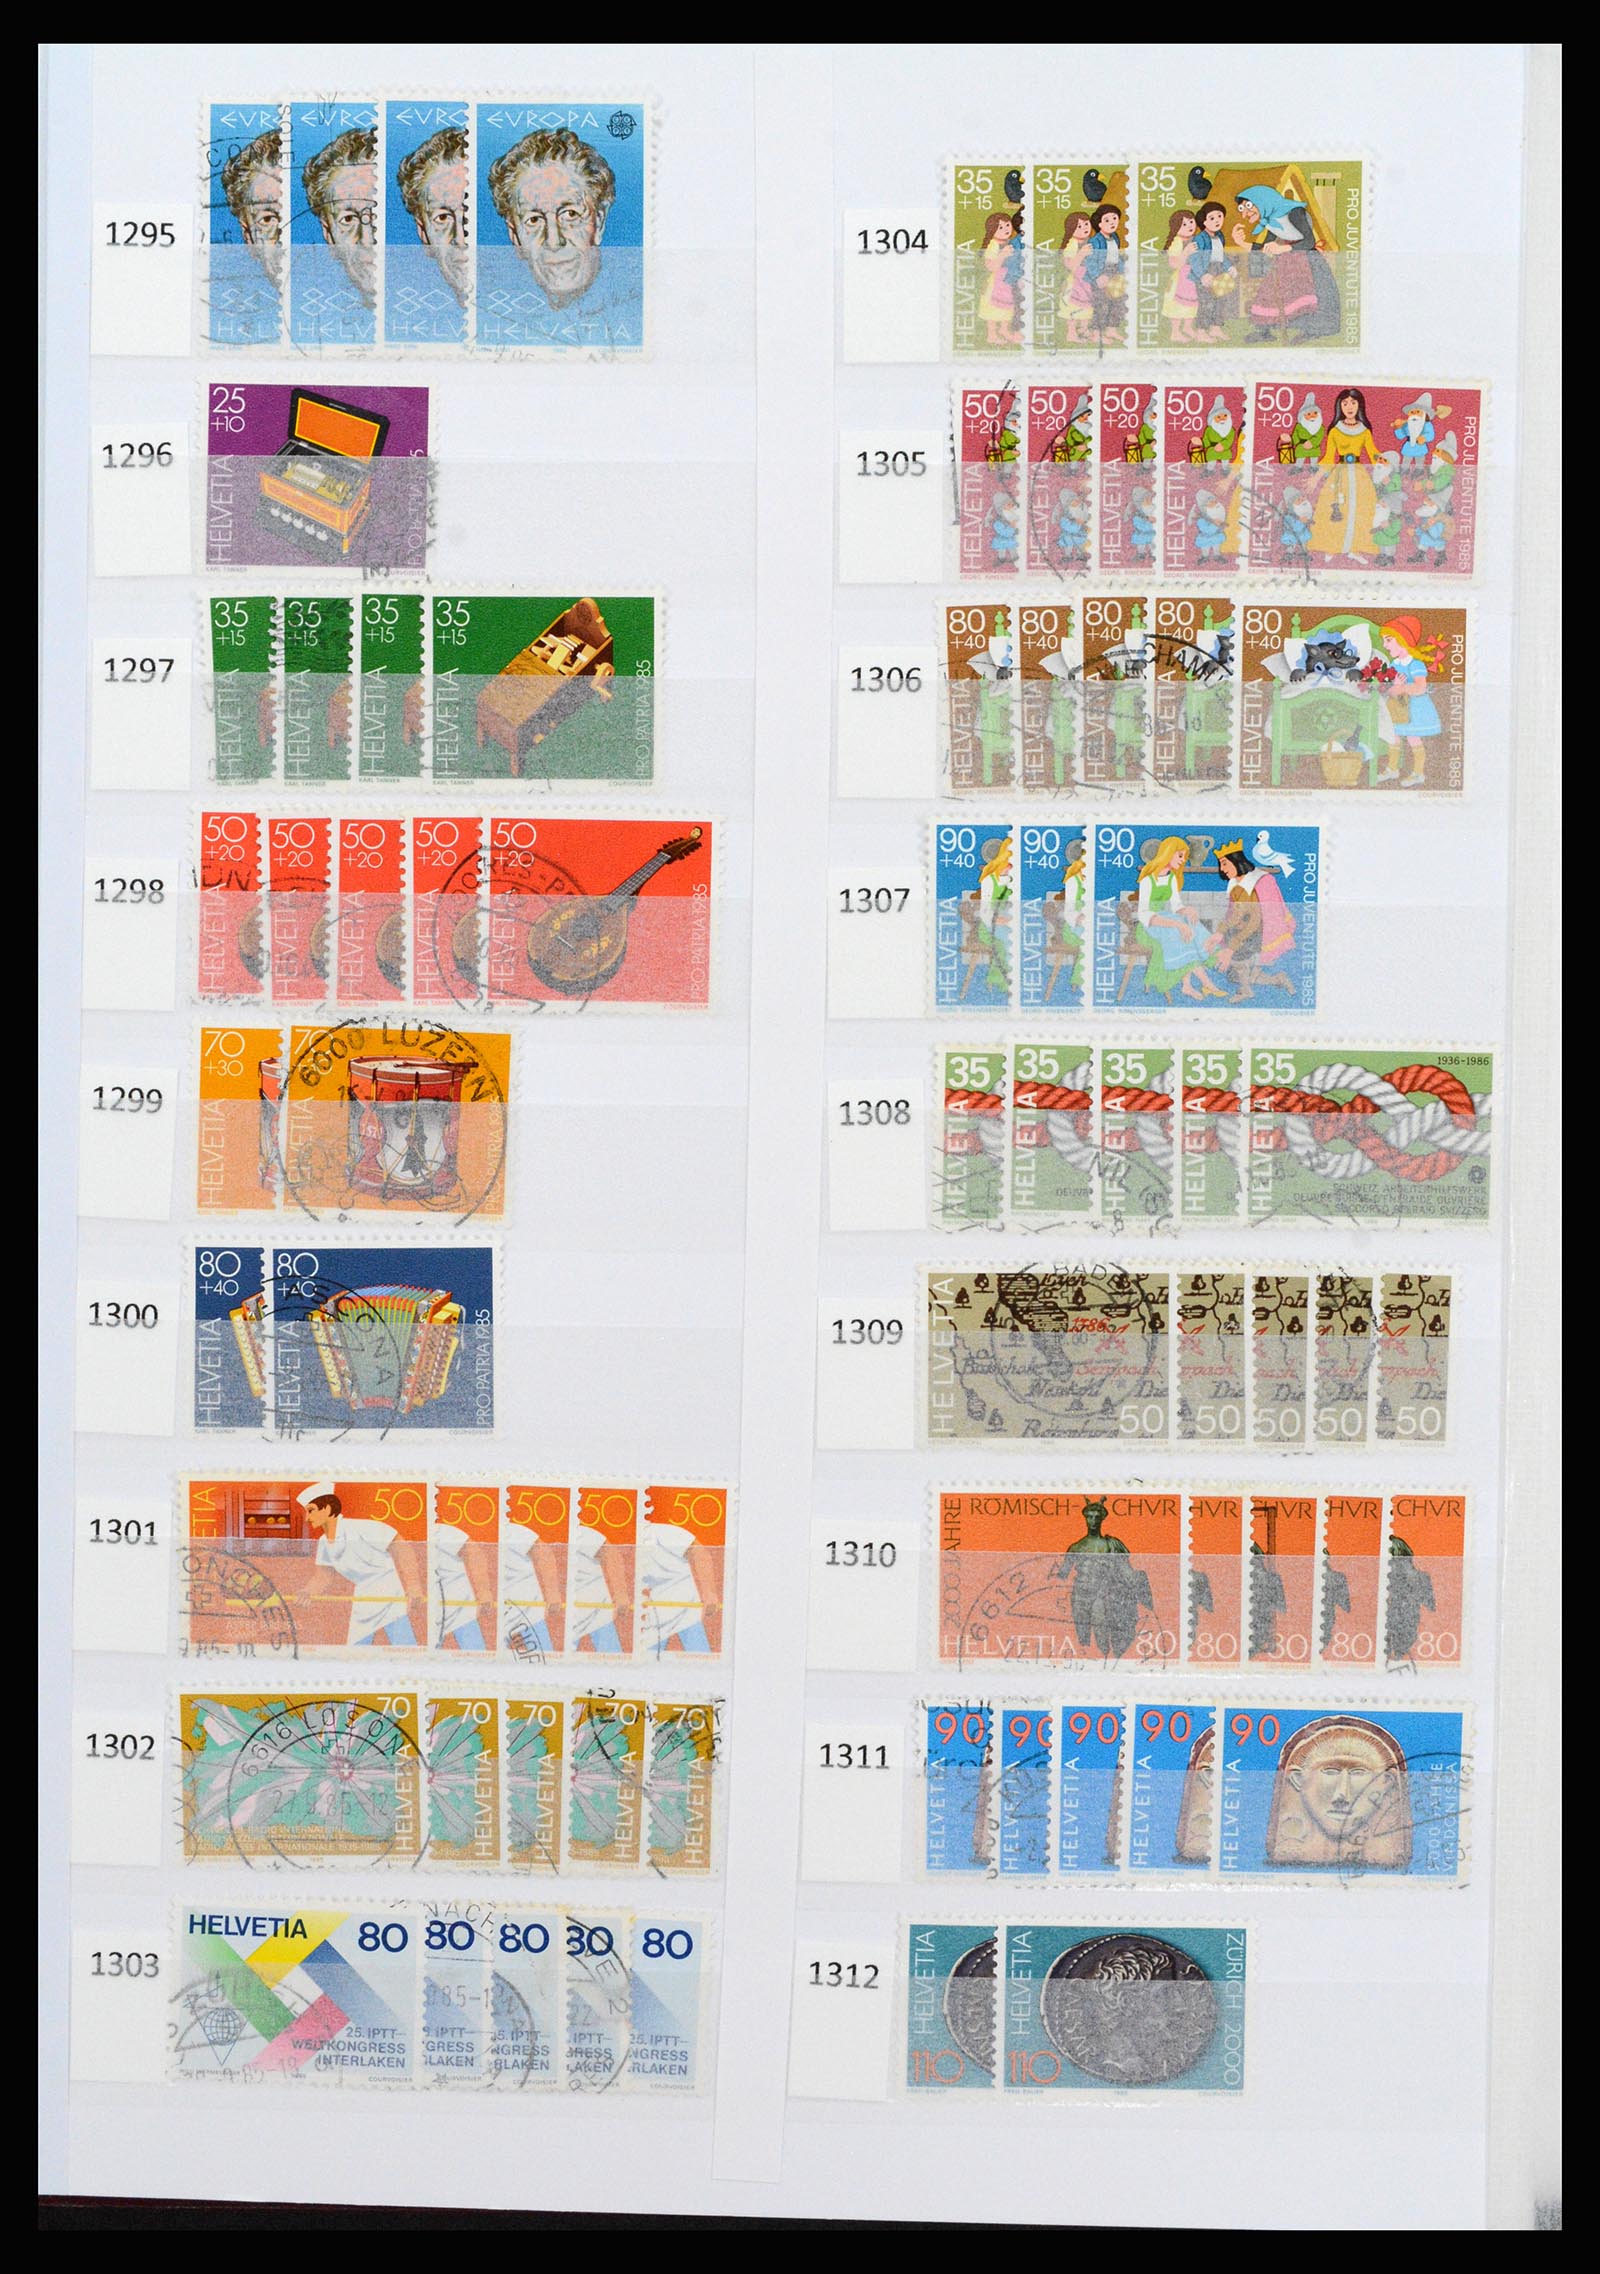 37252 073 - Stamp collection 37252 Switzerland 1900-2011.